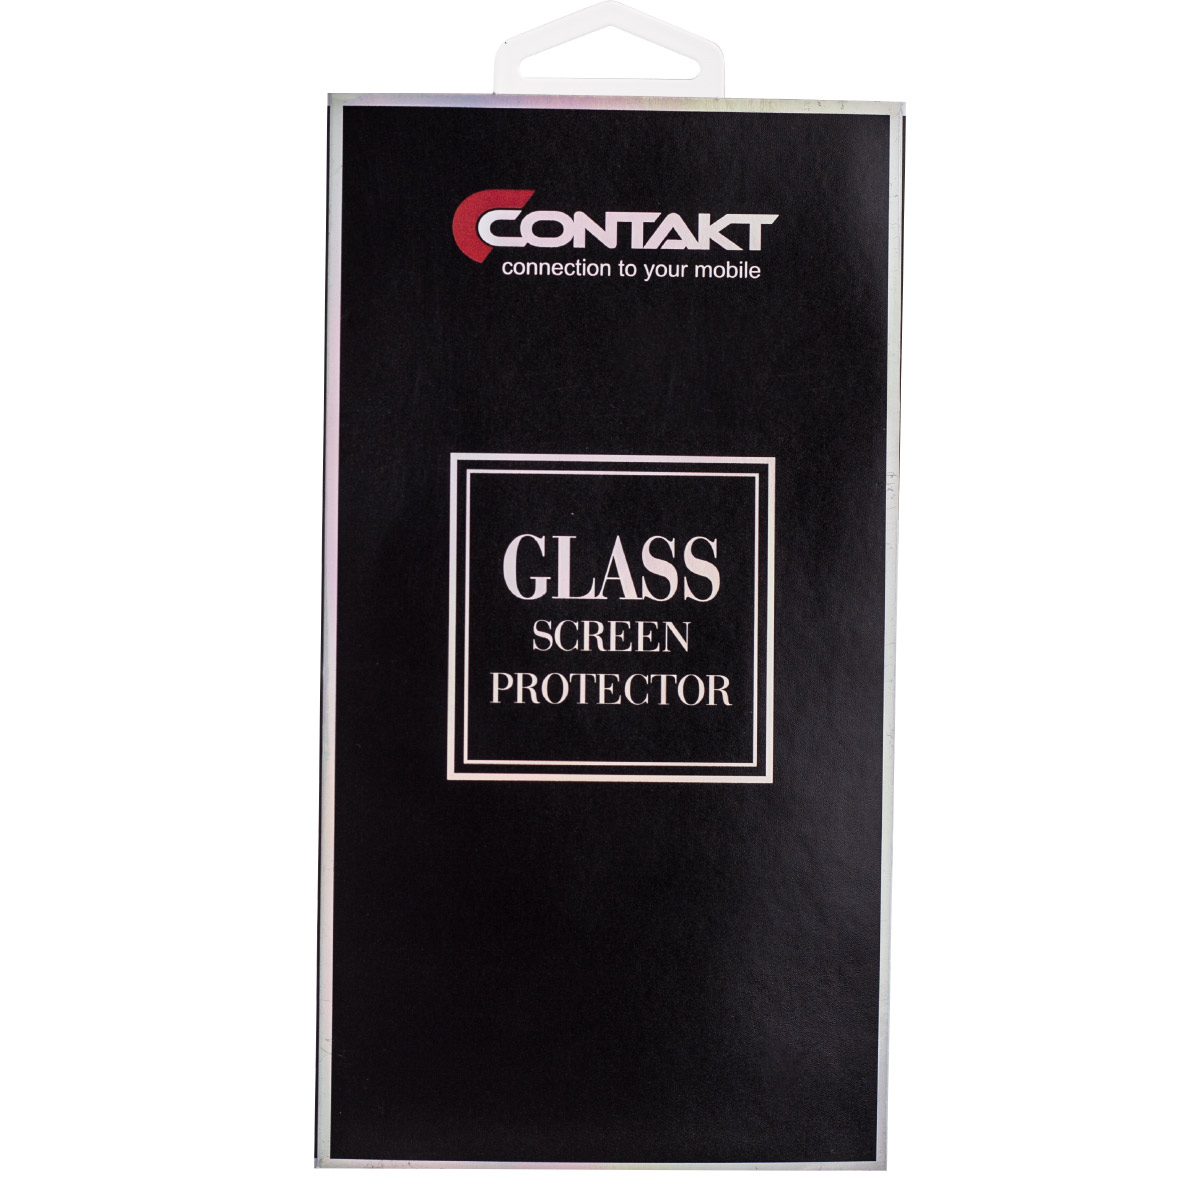 Folie sticla Sony Xperia Z3 Compact, Contakt thumb